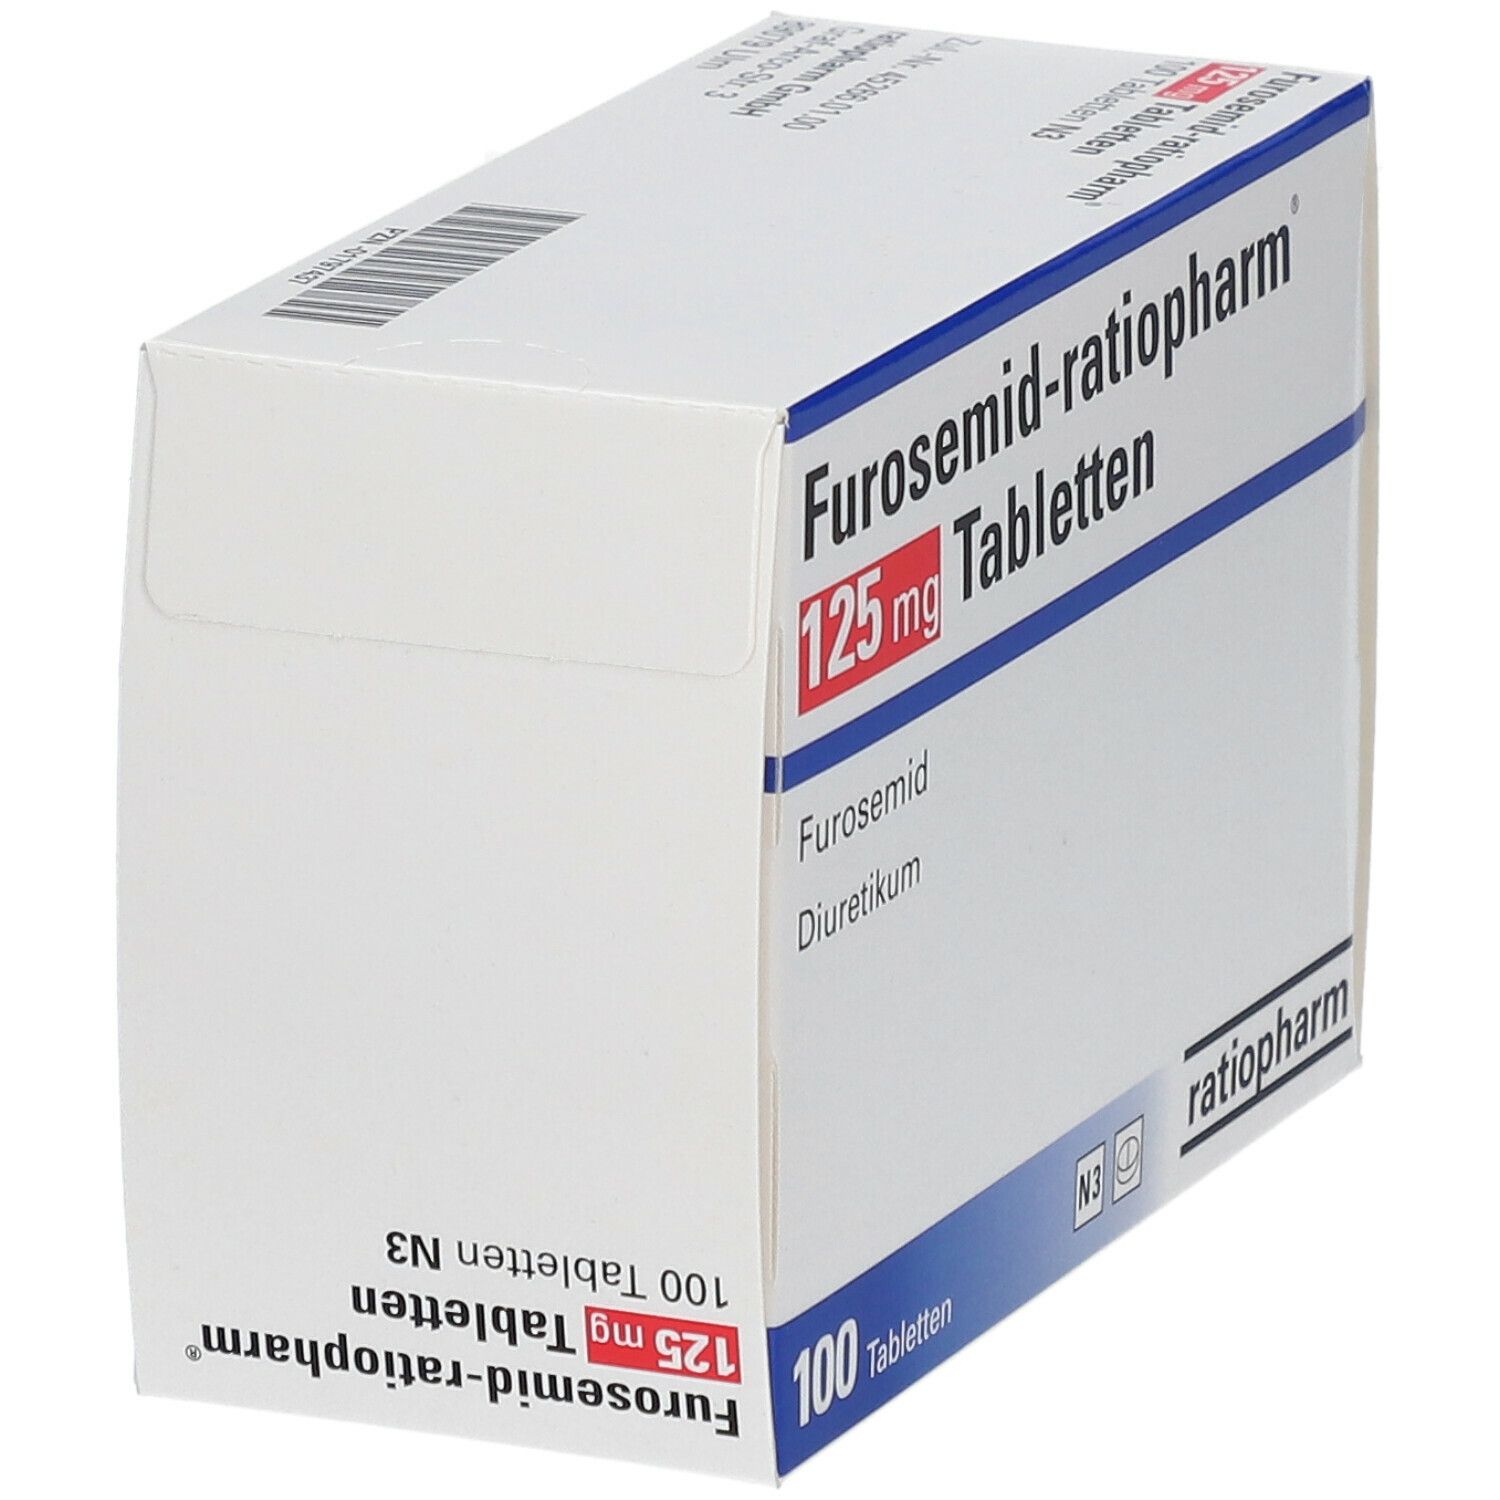 Furosemid-ratiopharm® 125 mg